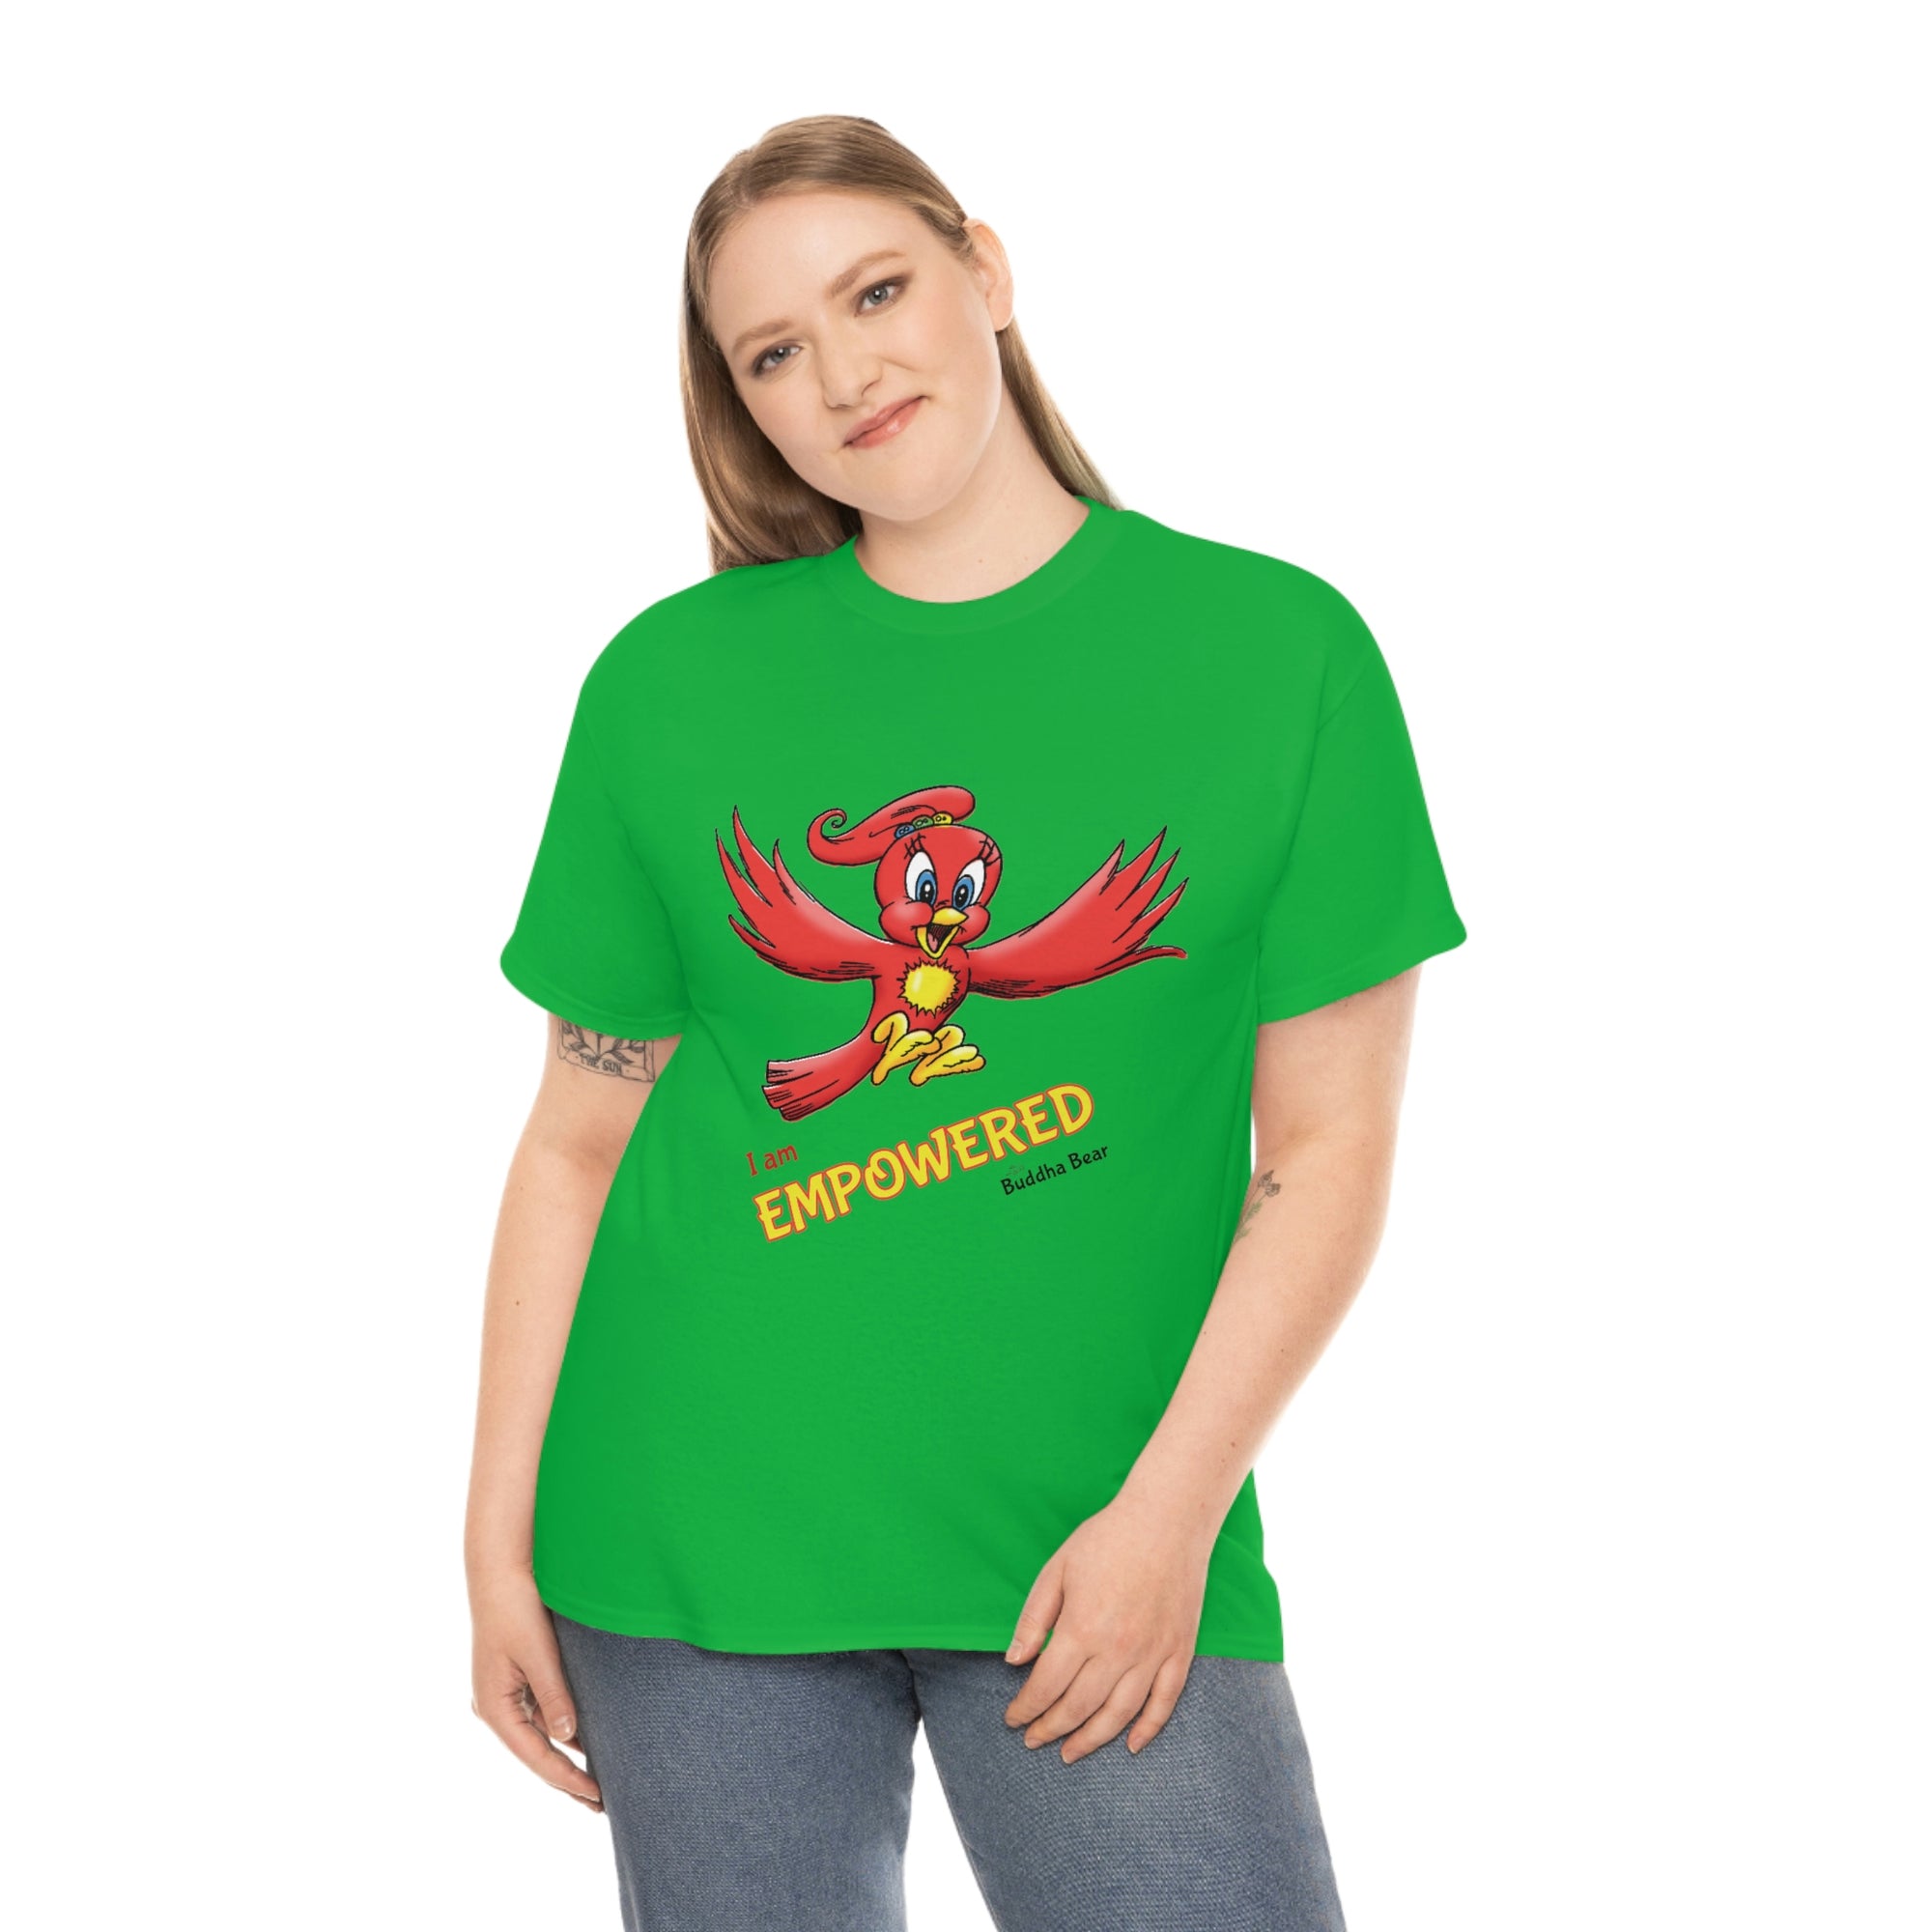 I am EMPOWERED - Unisex T-shirt